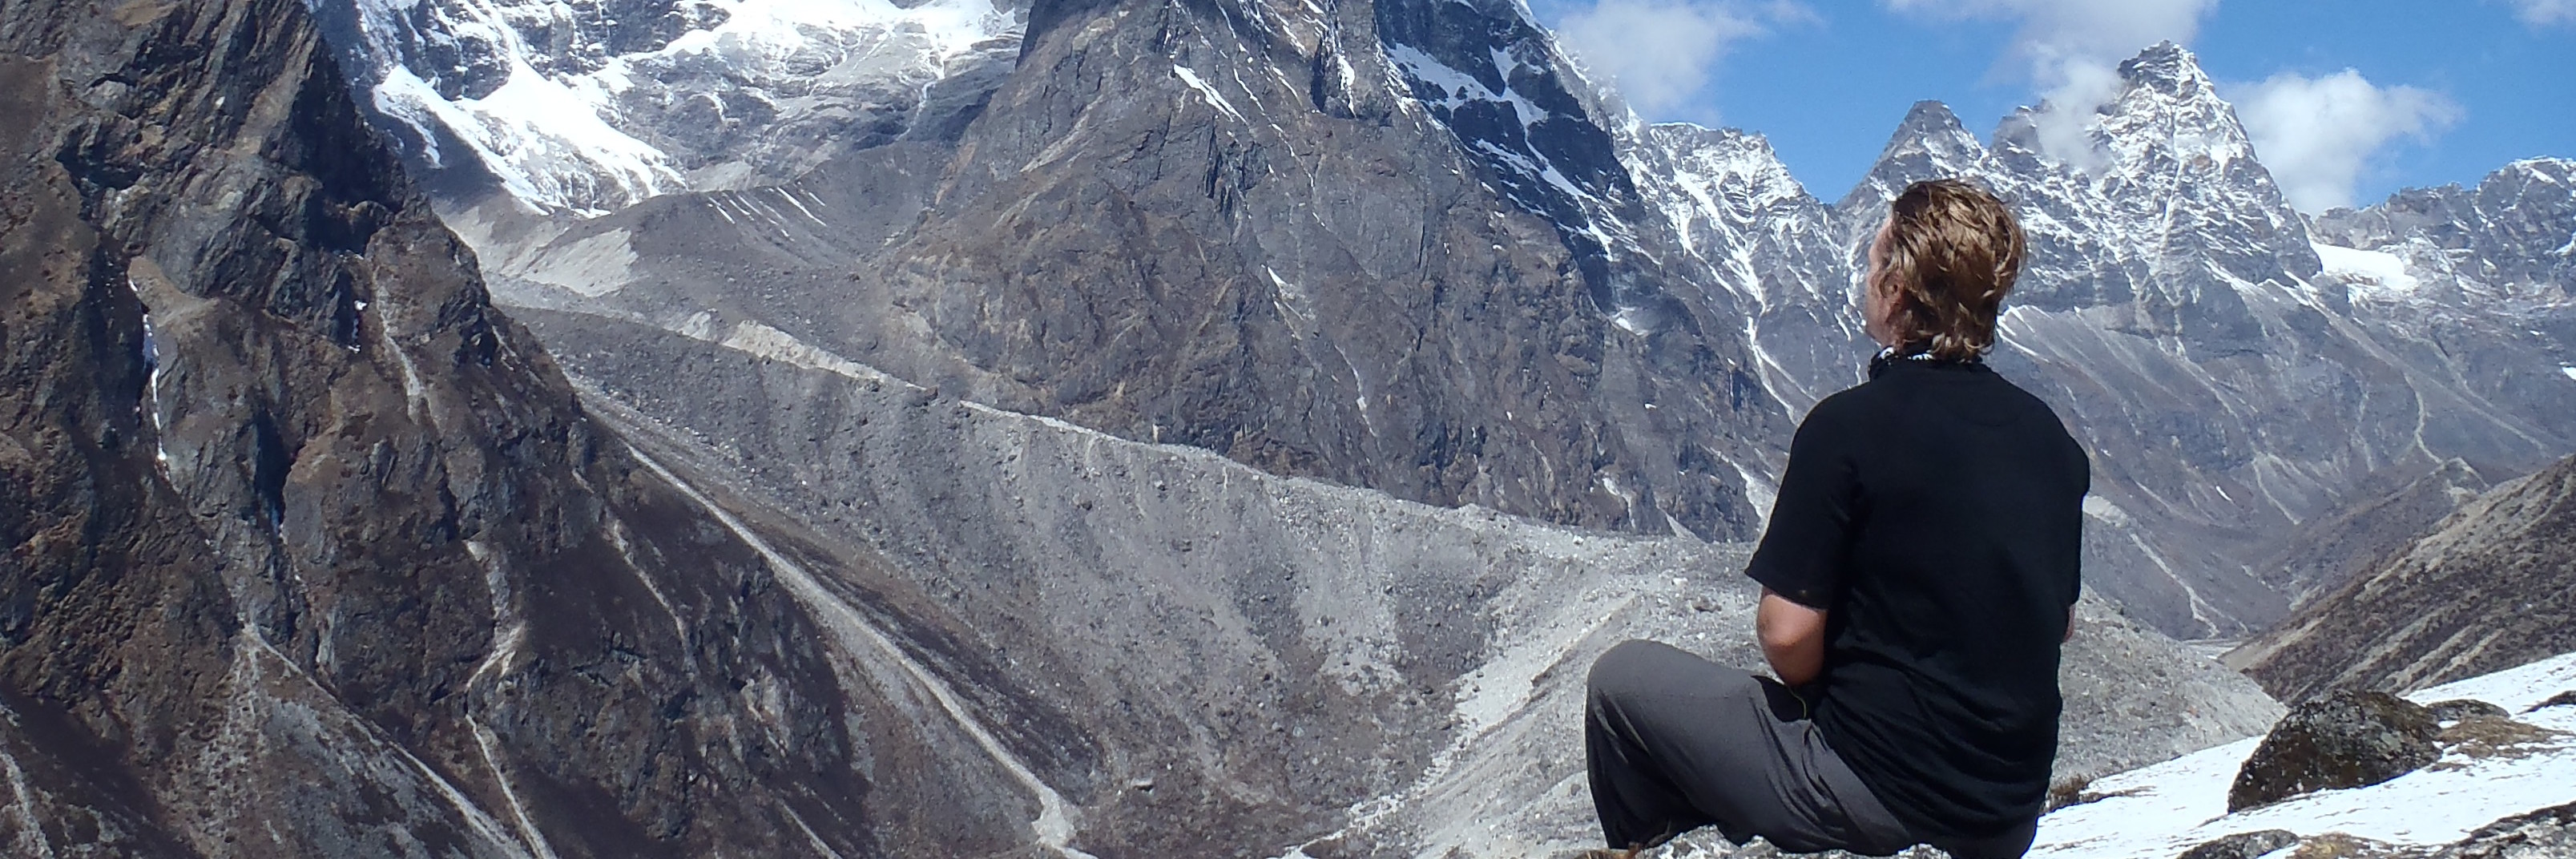 Meditating on Mt Everest